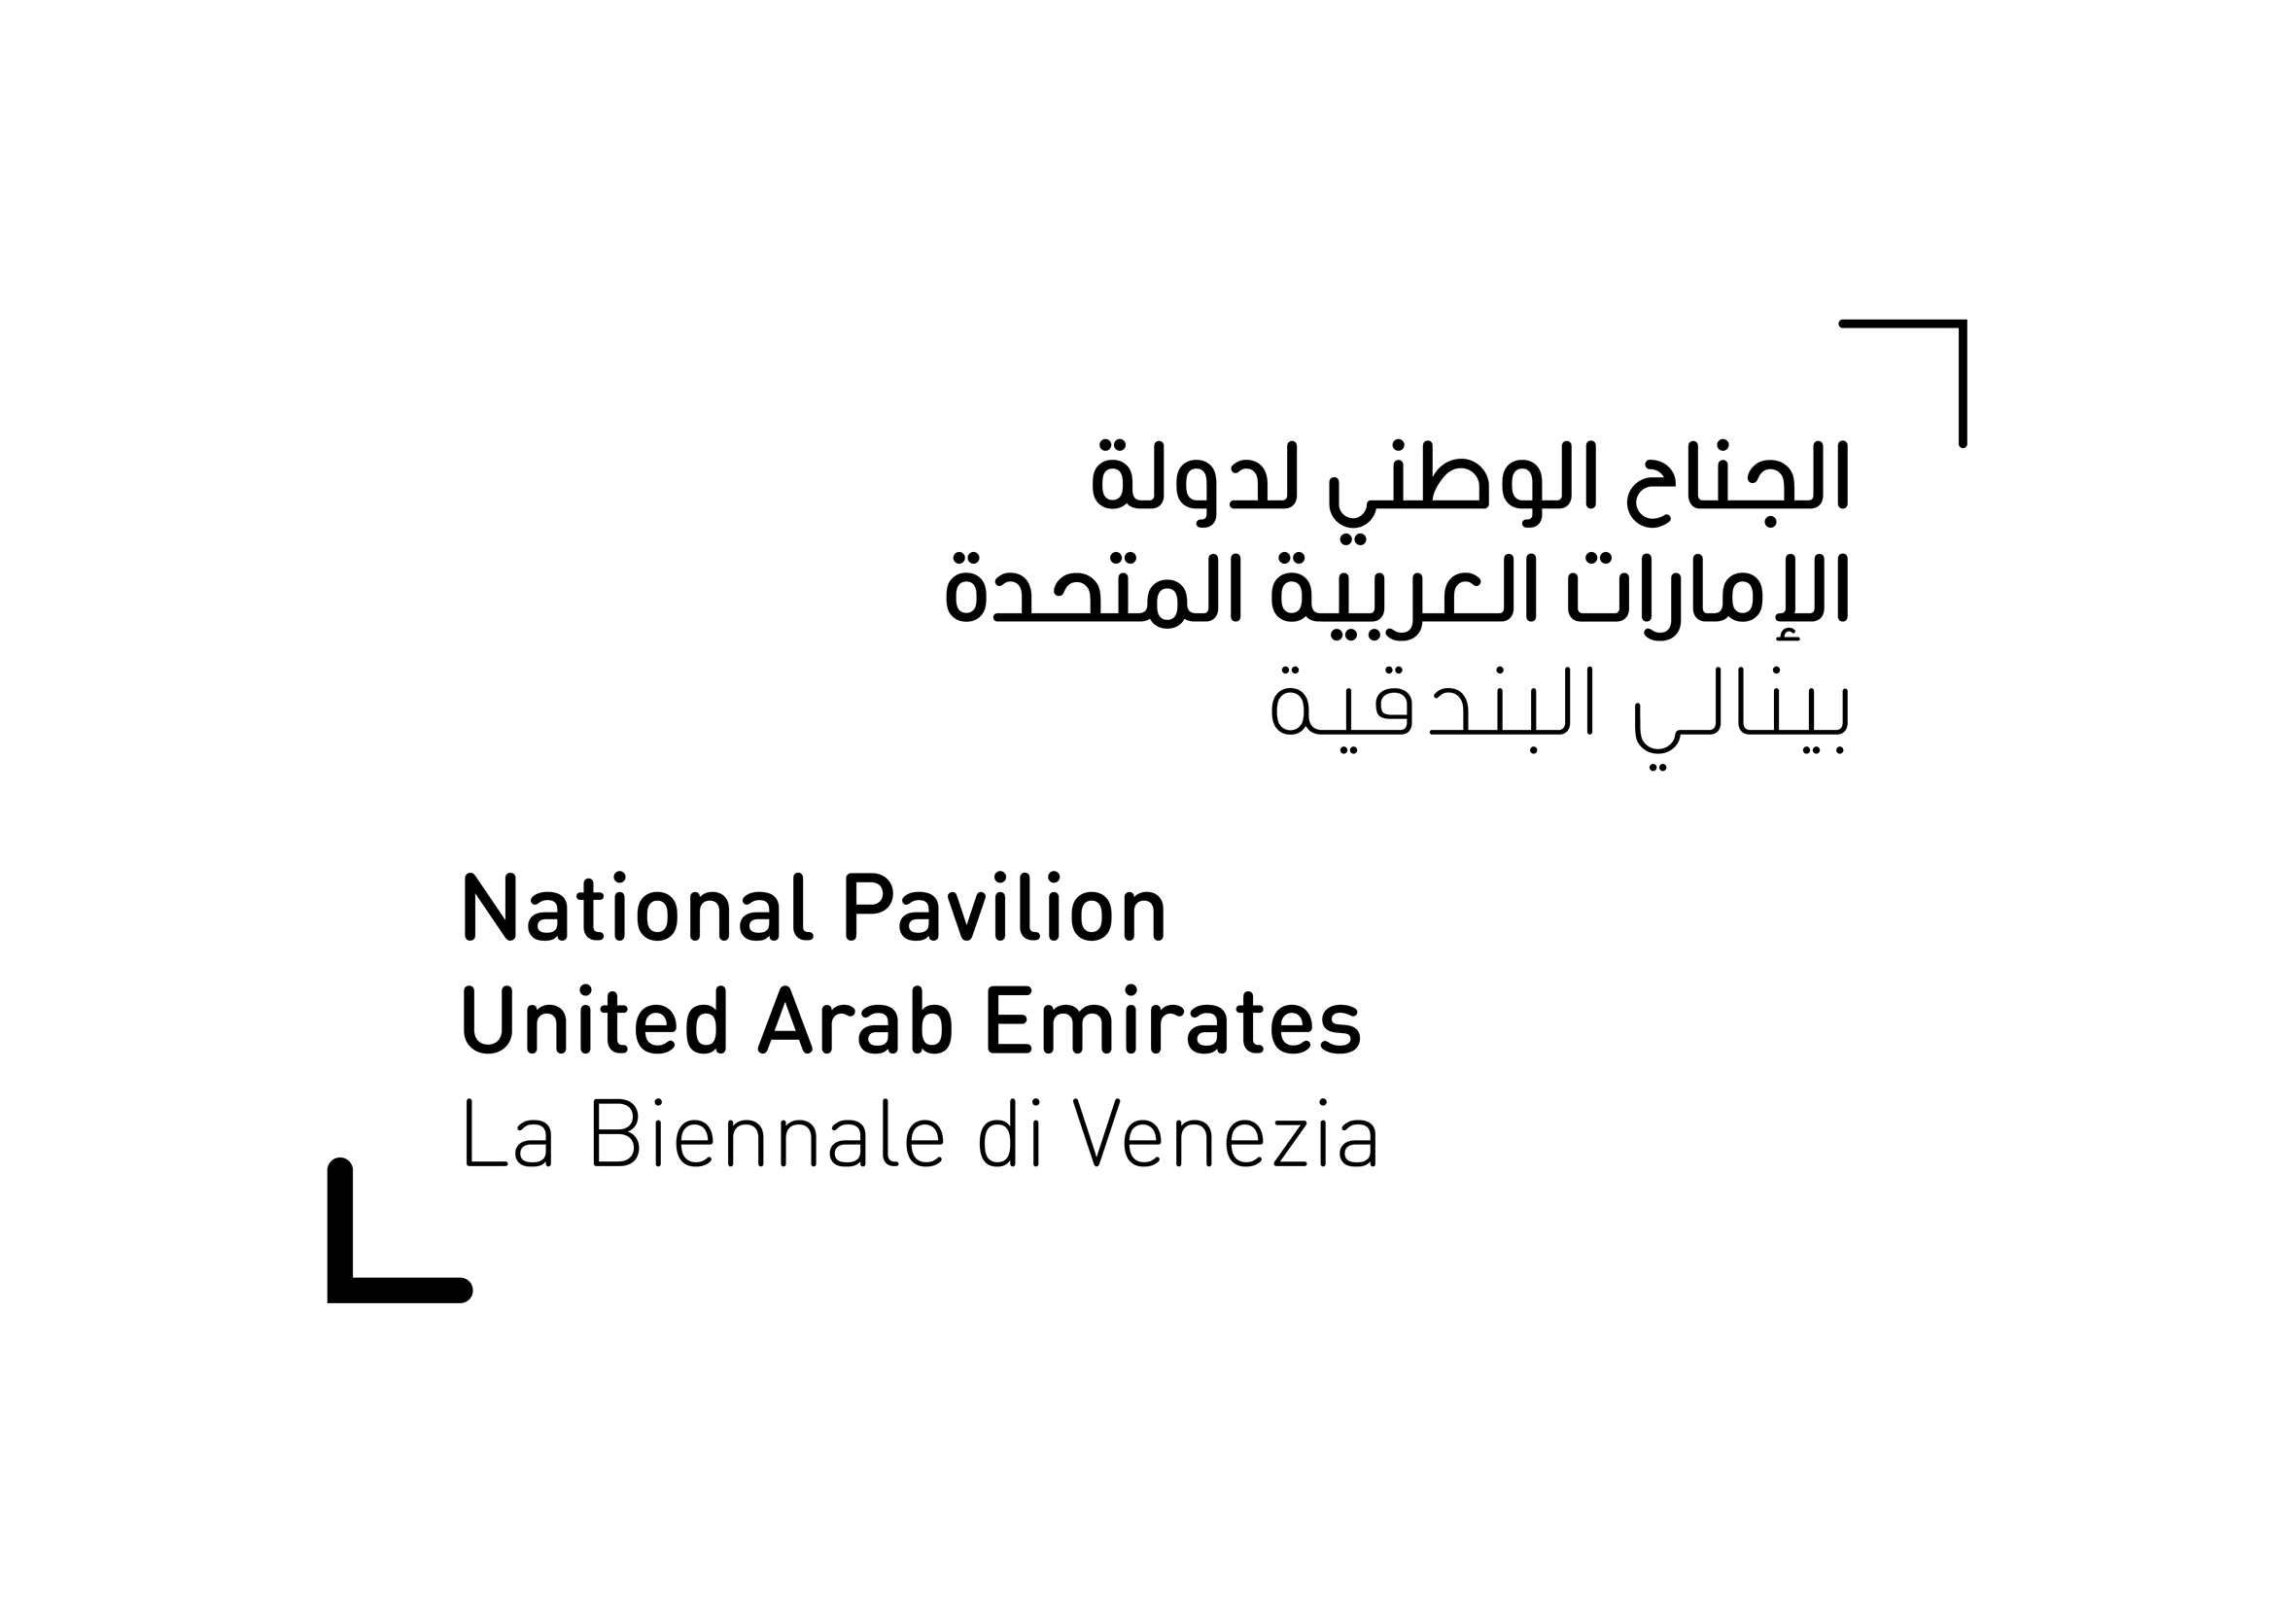 National Pavilion UAE